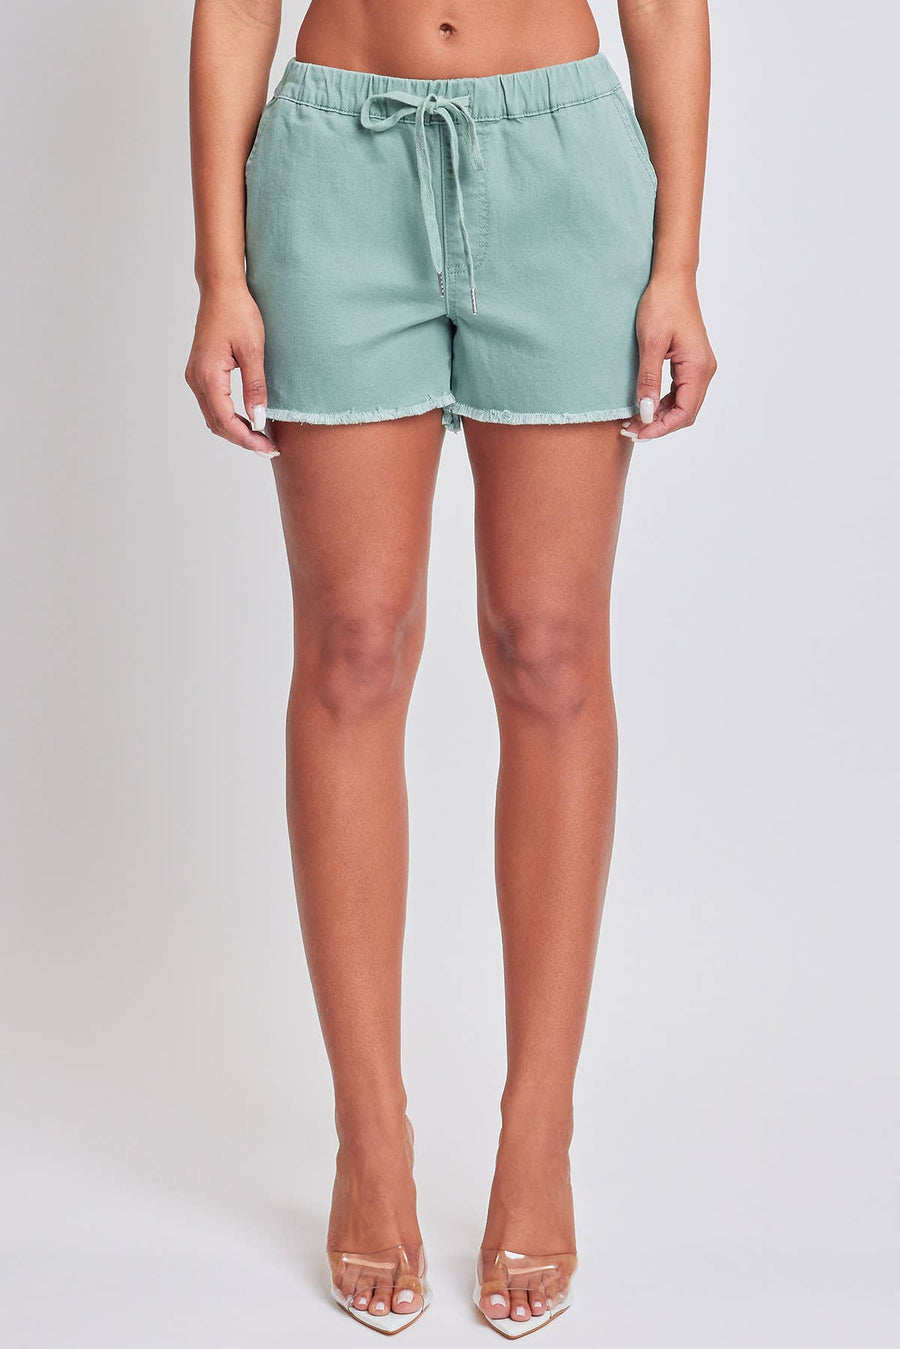 Frayed Hem Pull-on Shorts: Evergreen